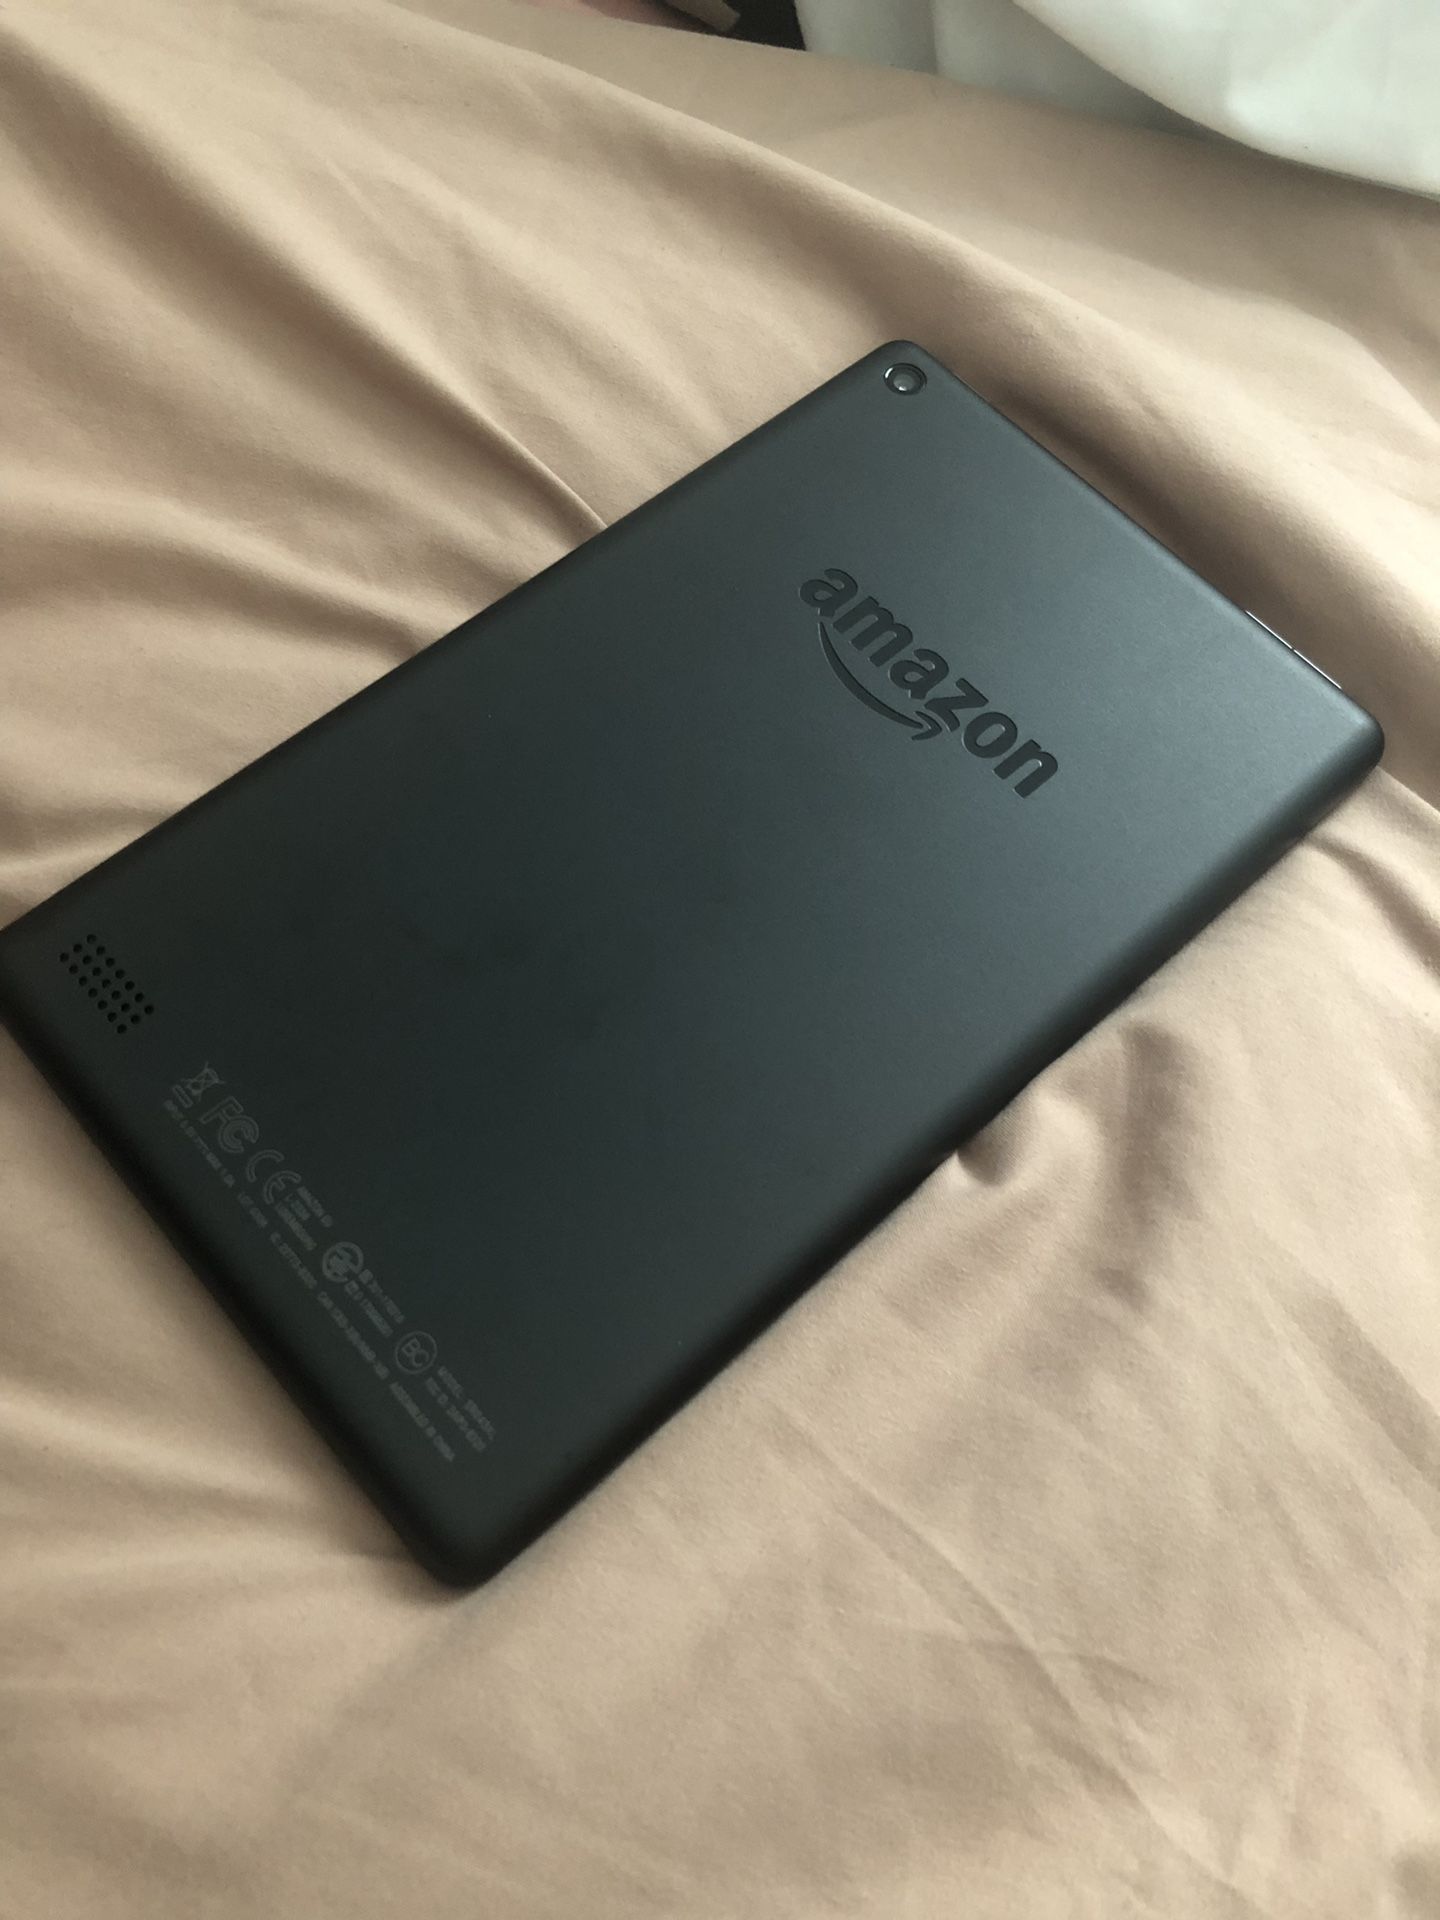 Amazon tablet Fire 7